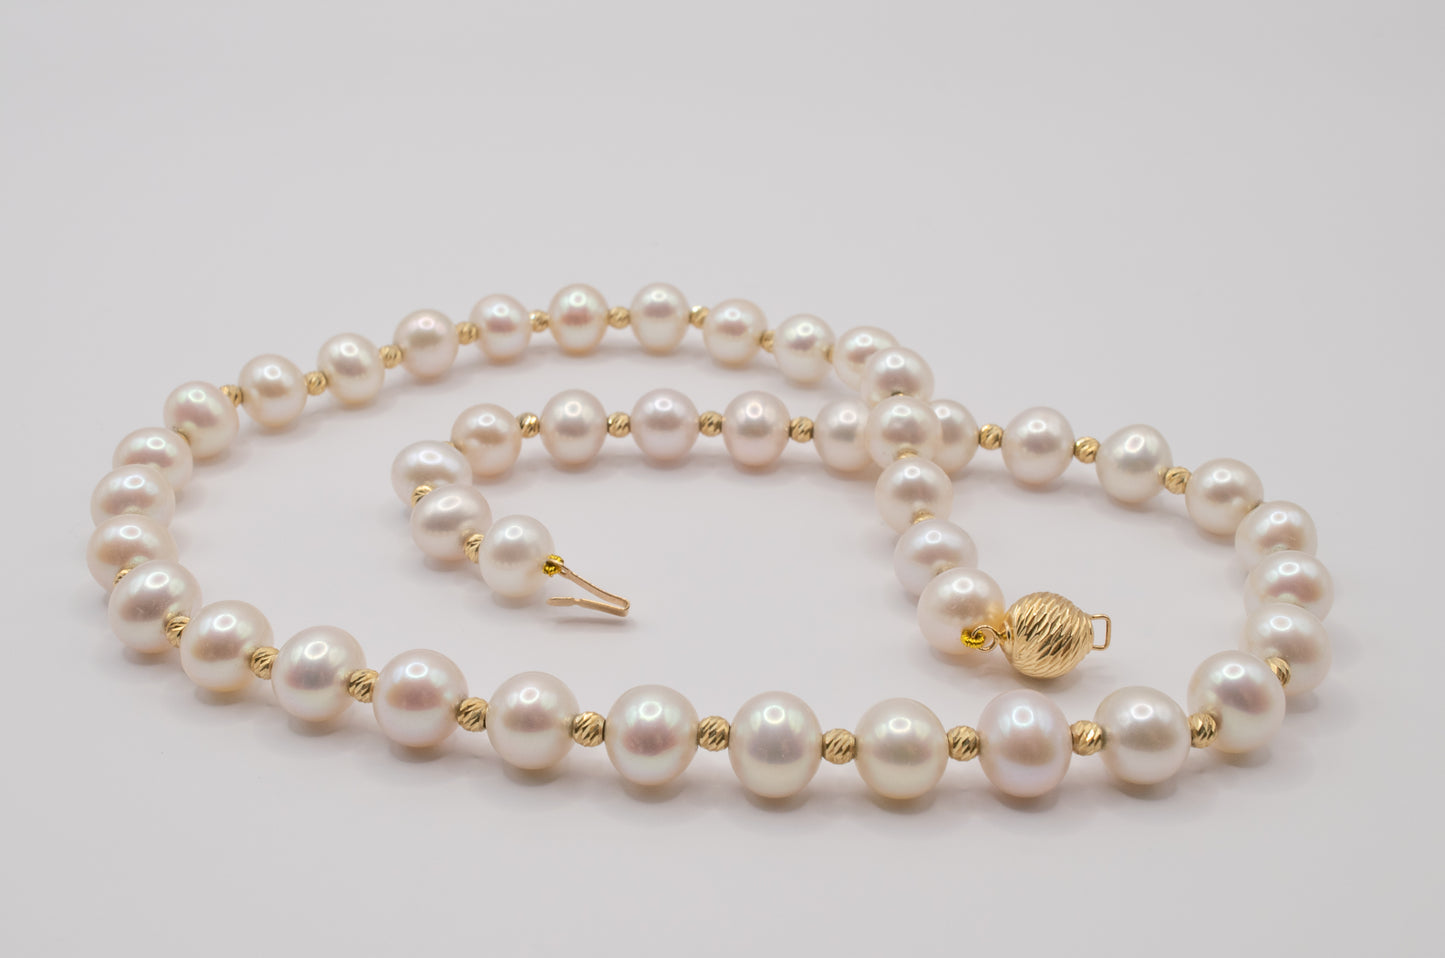 Vintage Cultured Pearl Strand Necklace & 14k diamond cut Clasp